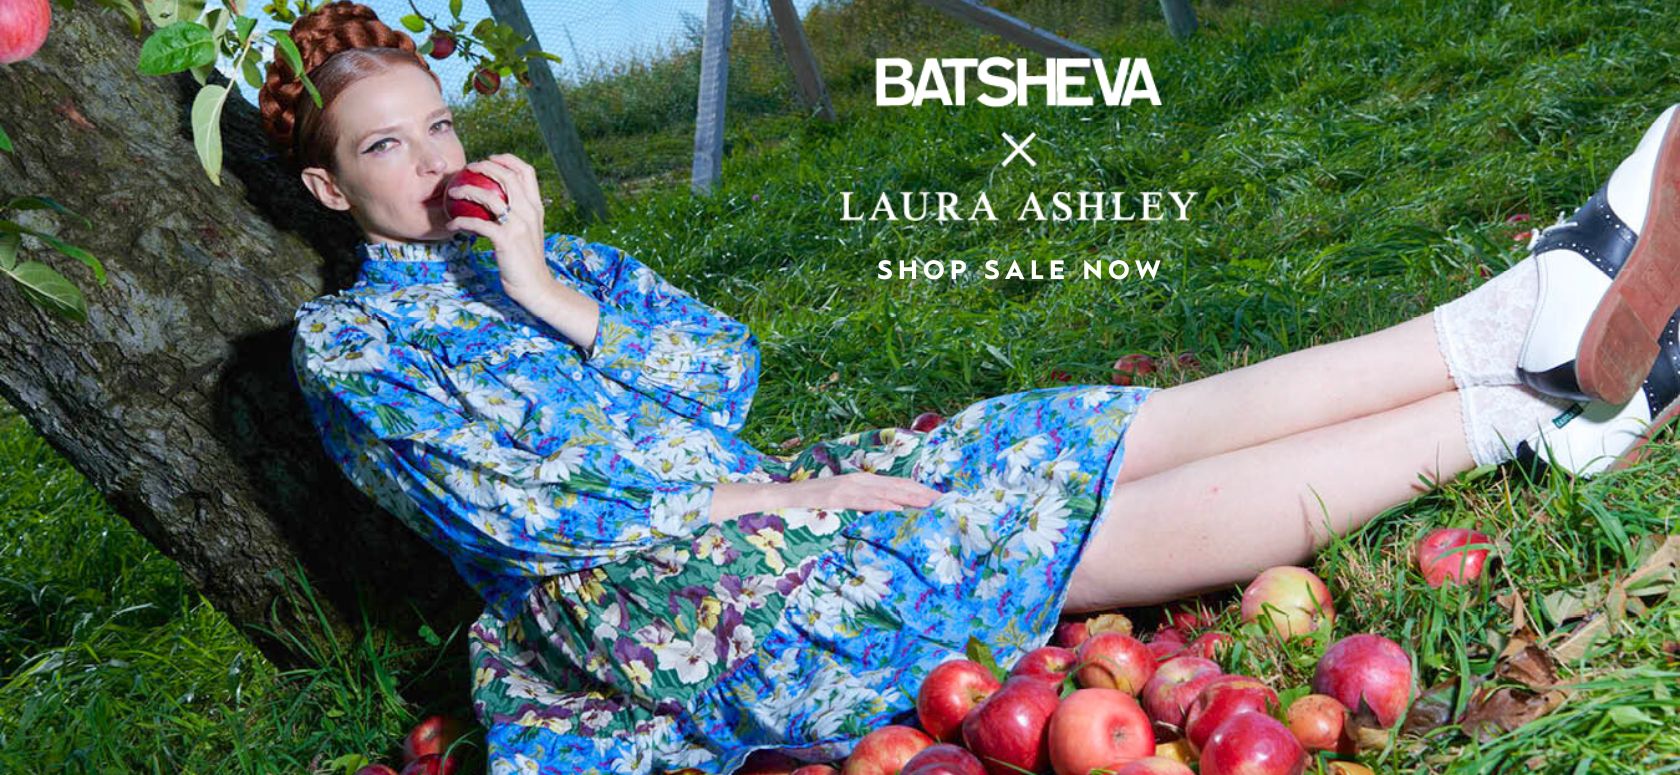 Batsheva X Laura Ashley. Shop Sale Now.